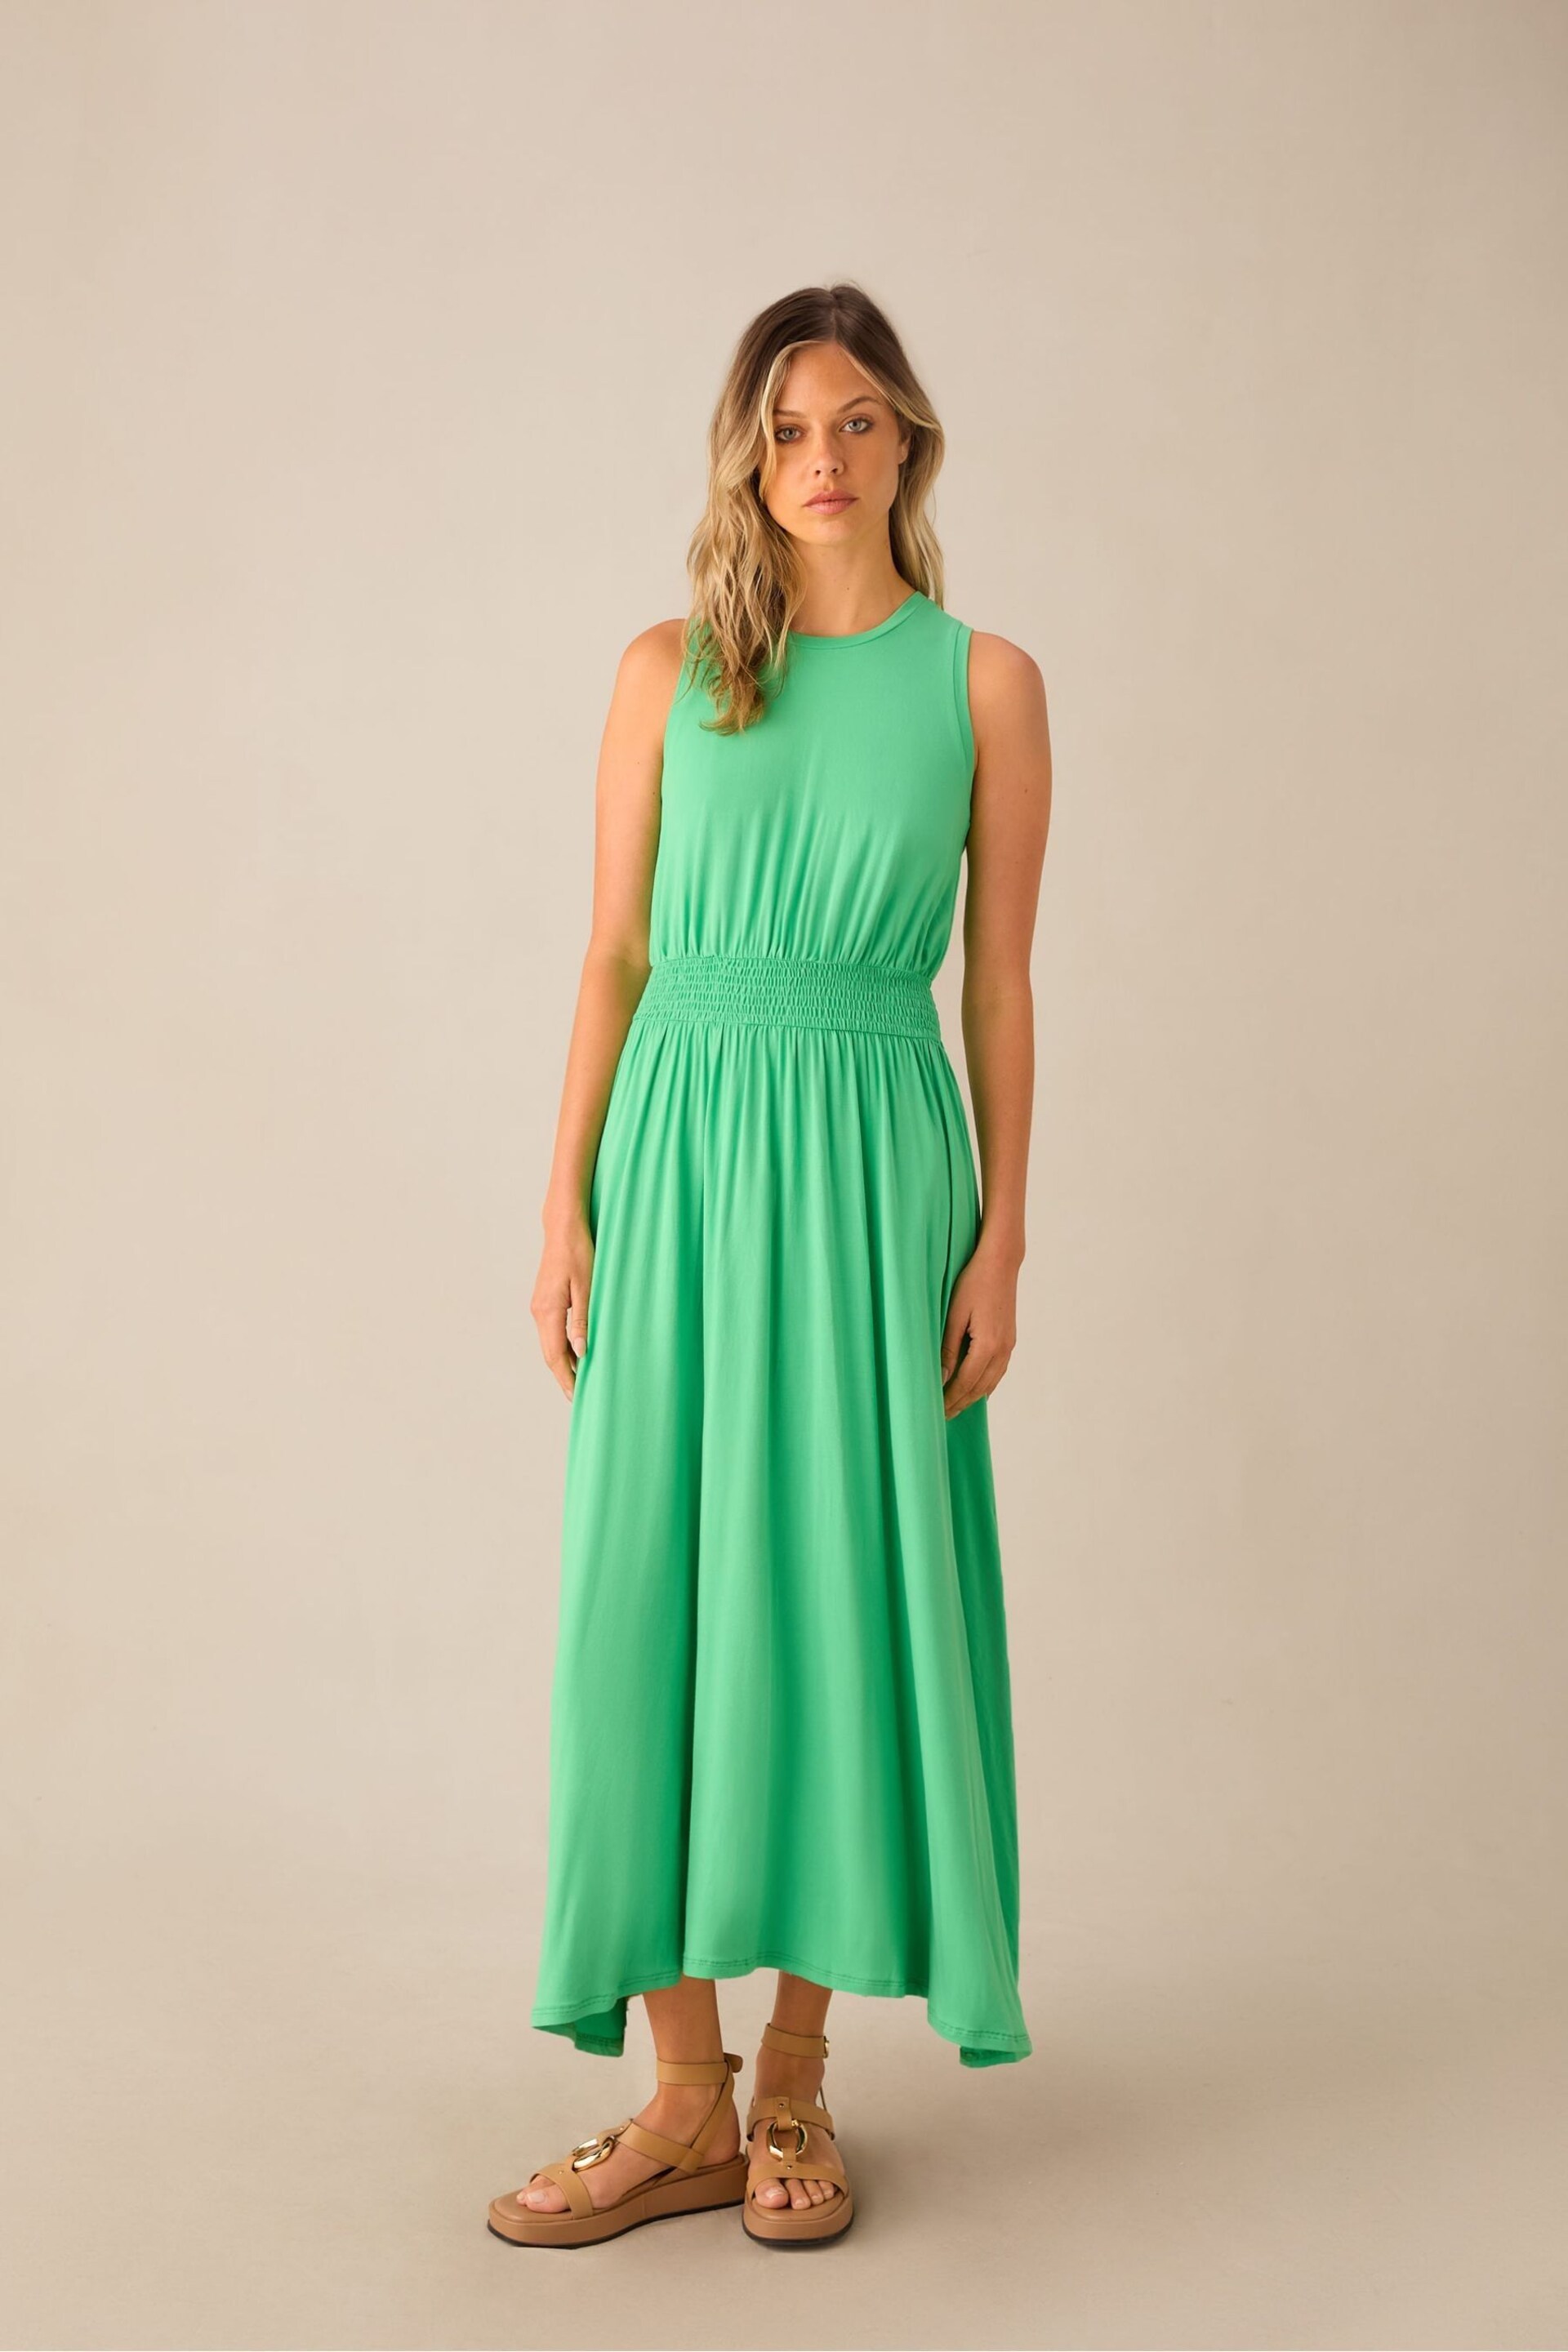 Ro&Zo Green Jersey Shirred Waistband Dress - Image 3 of 5